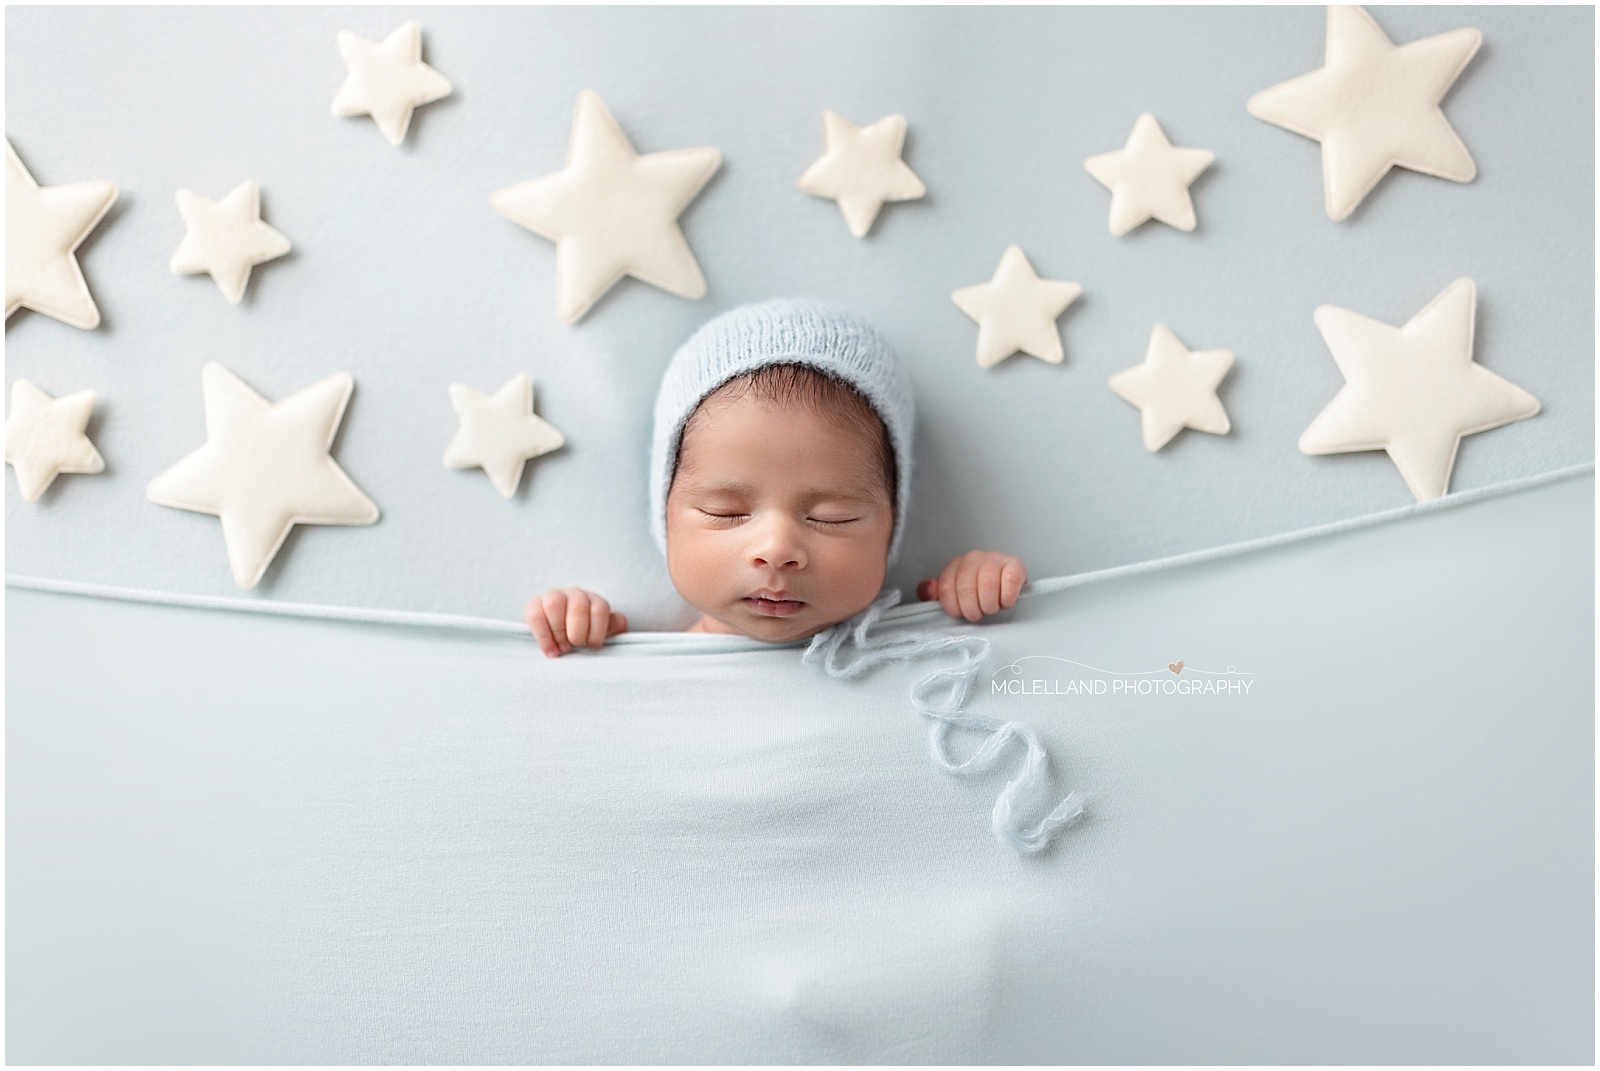 Baby boy sleeping under the stars